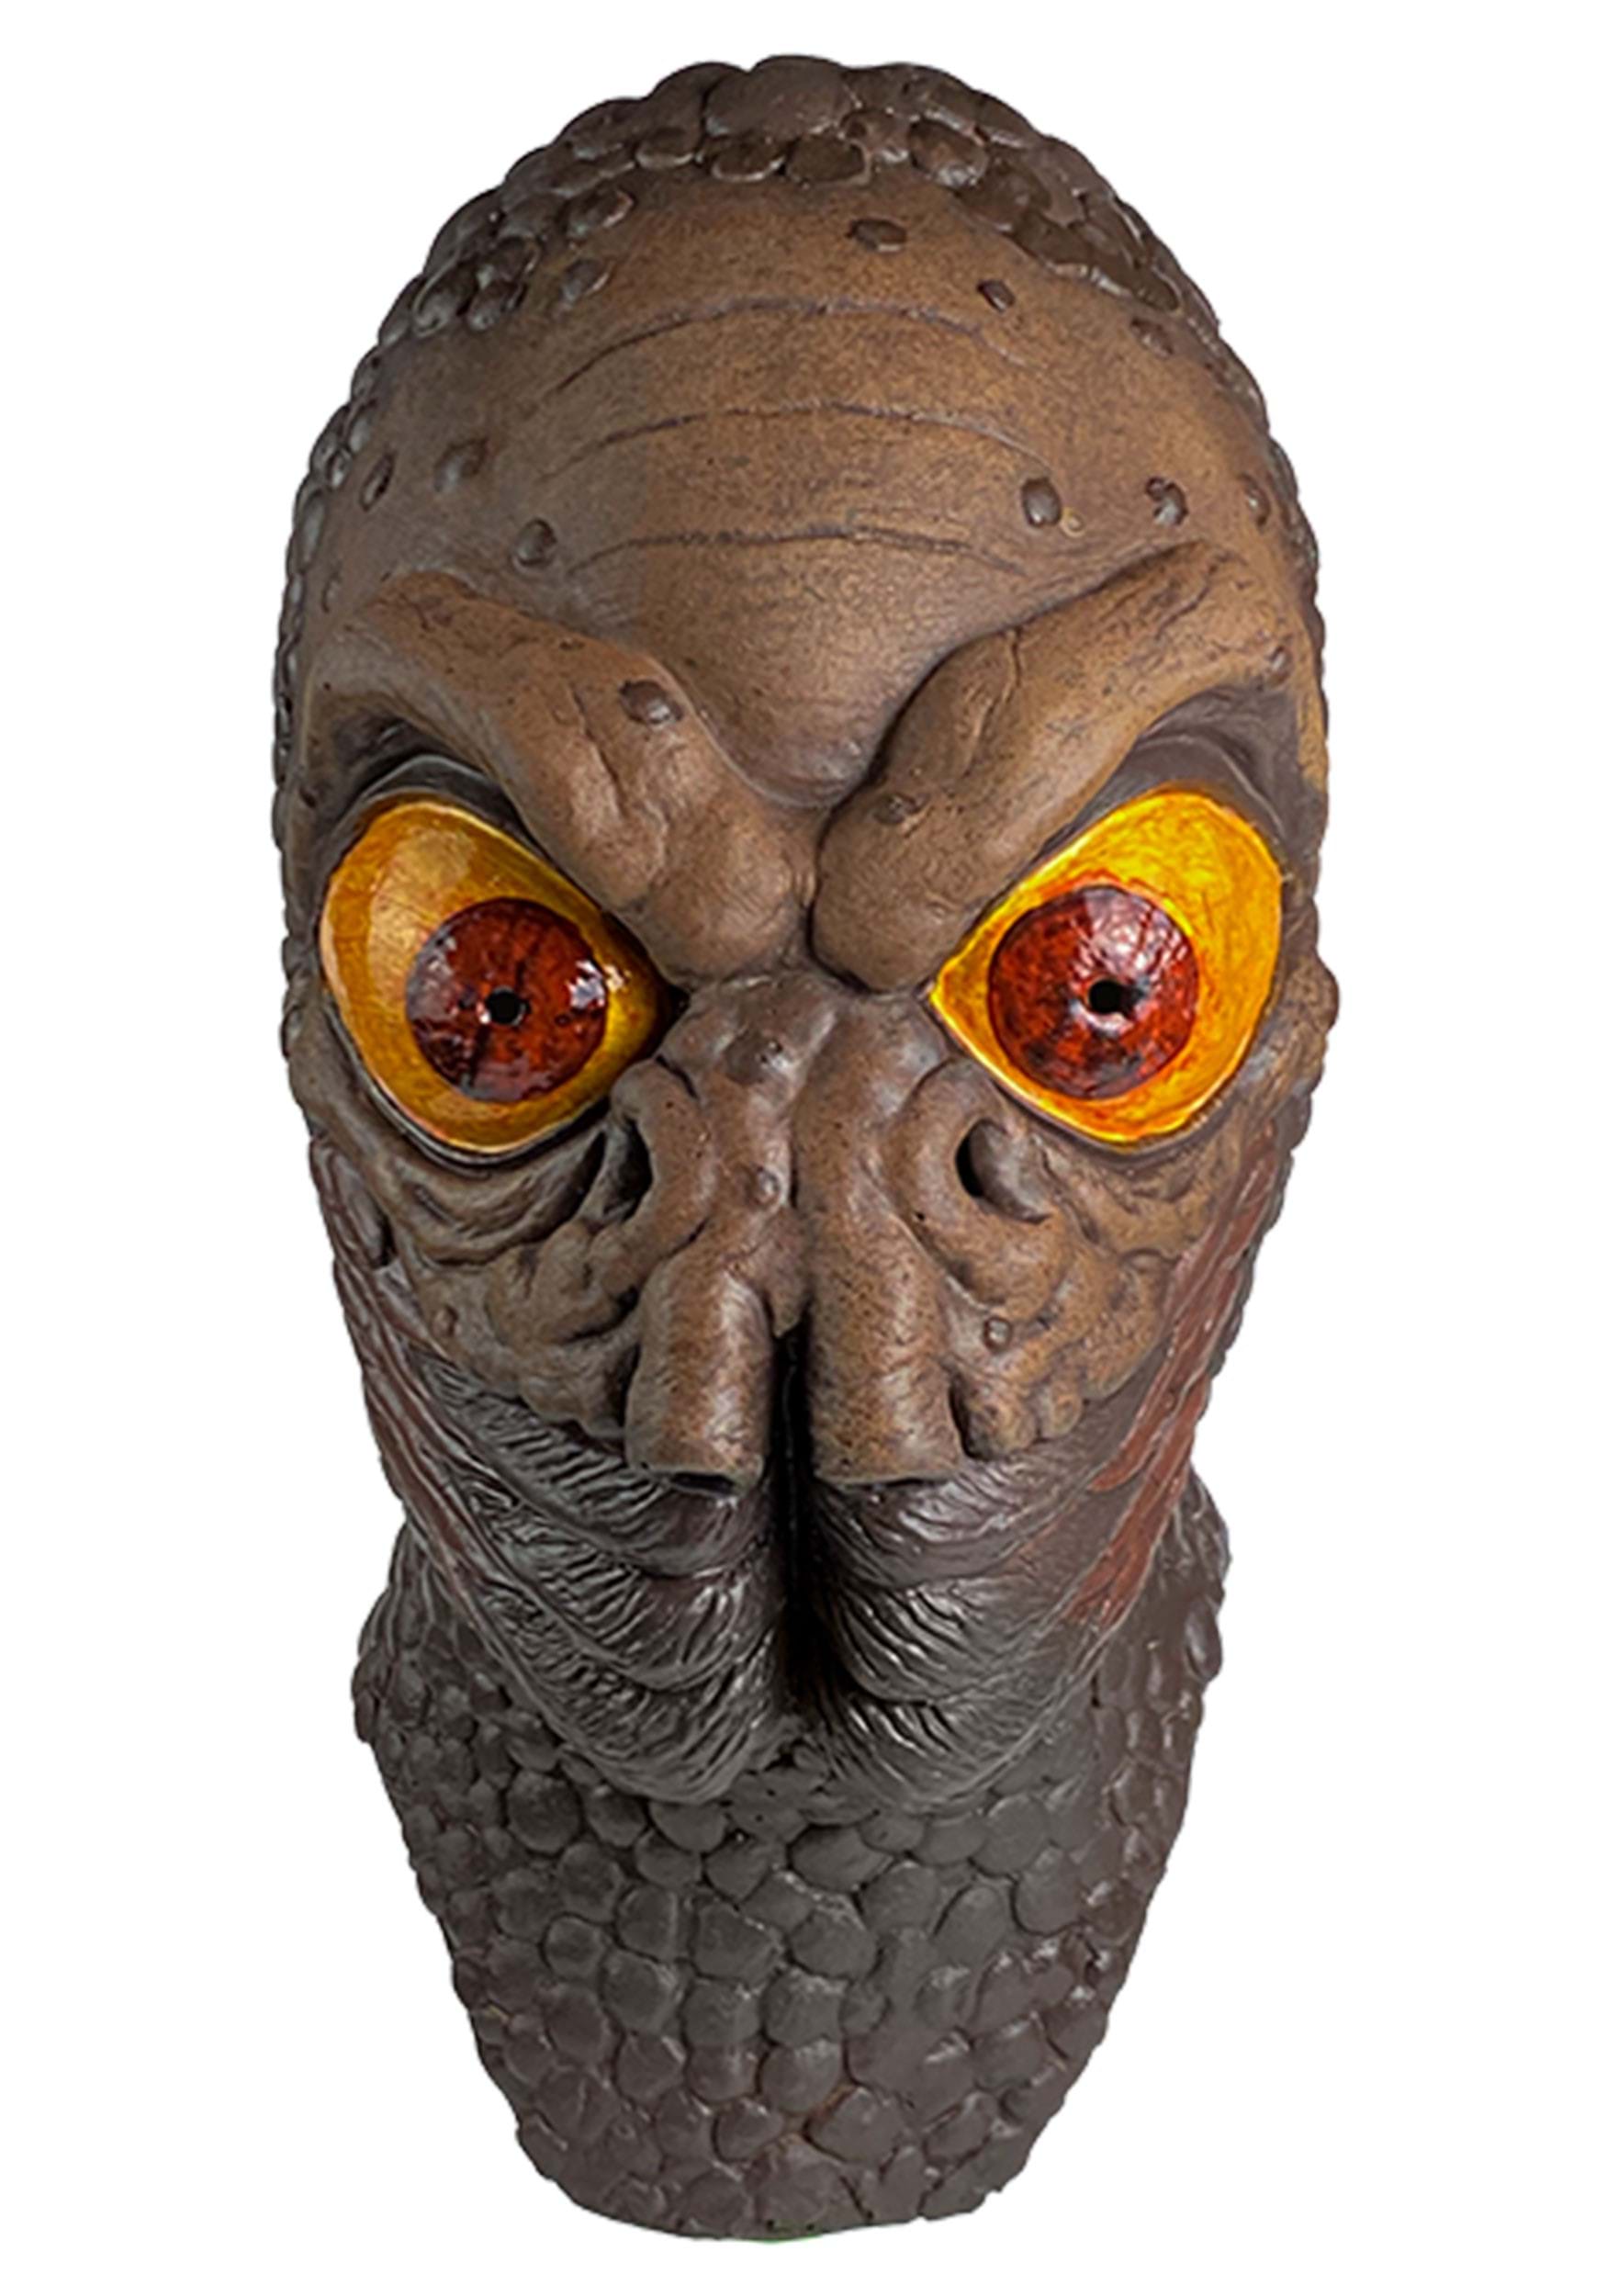 Universal Monsters Adult Moleman Mask